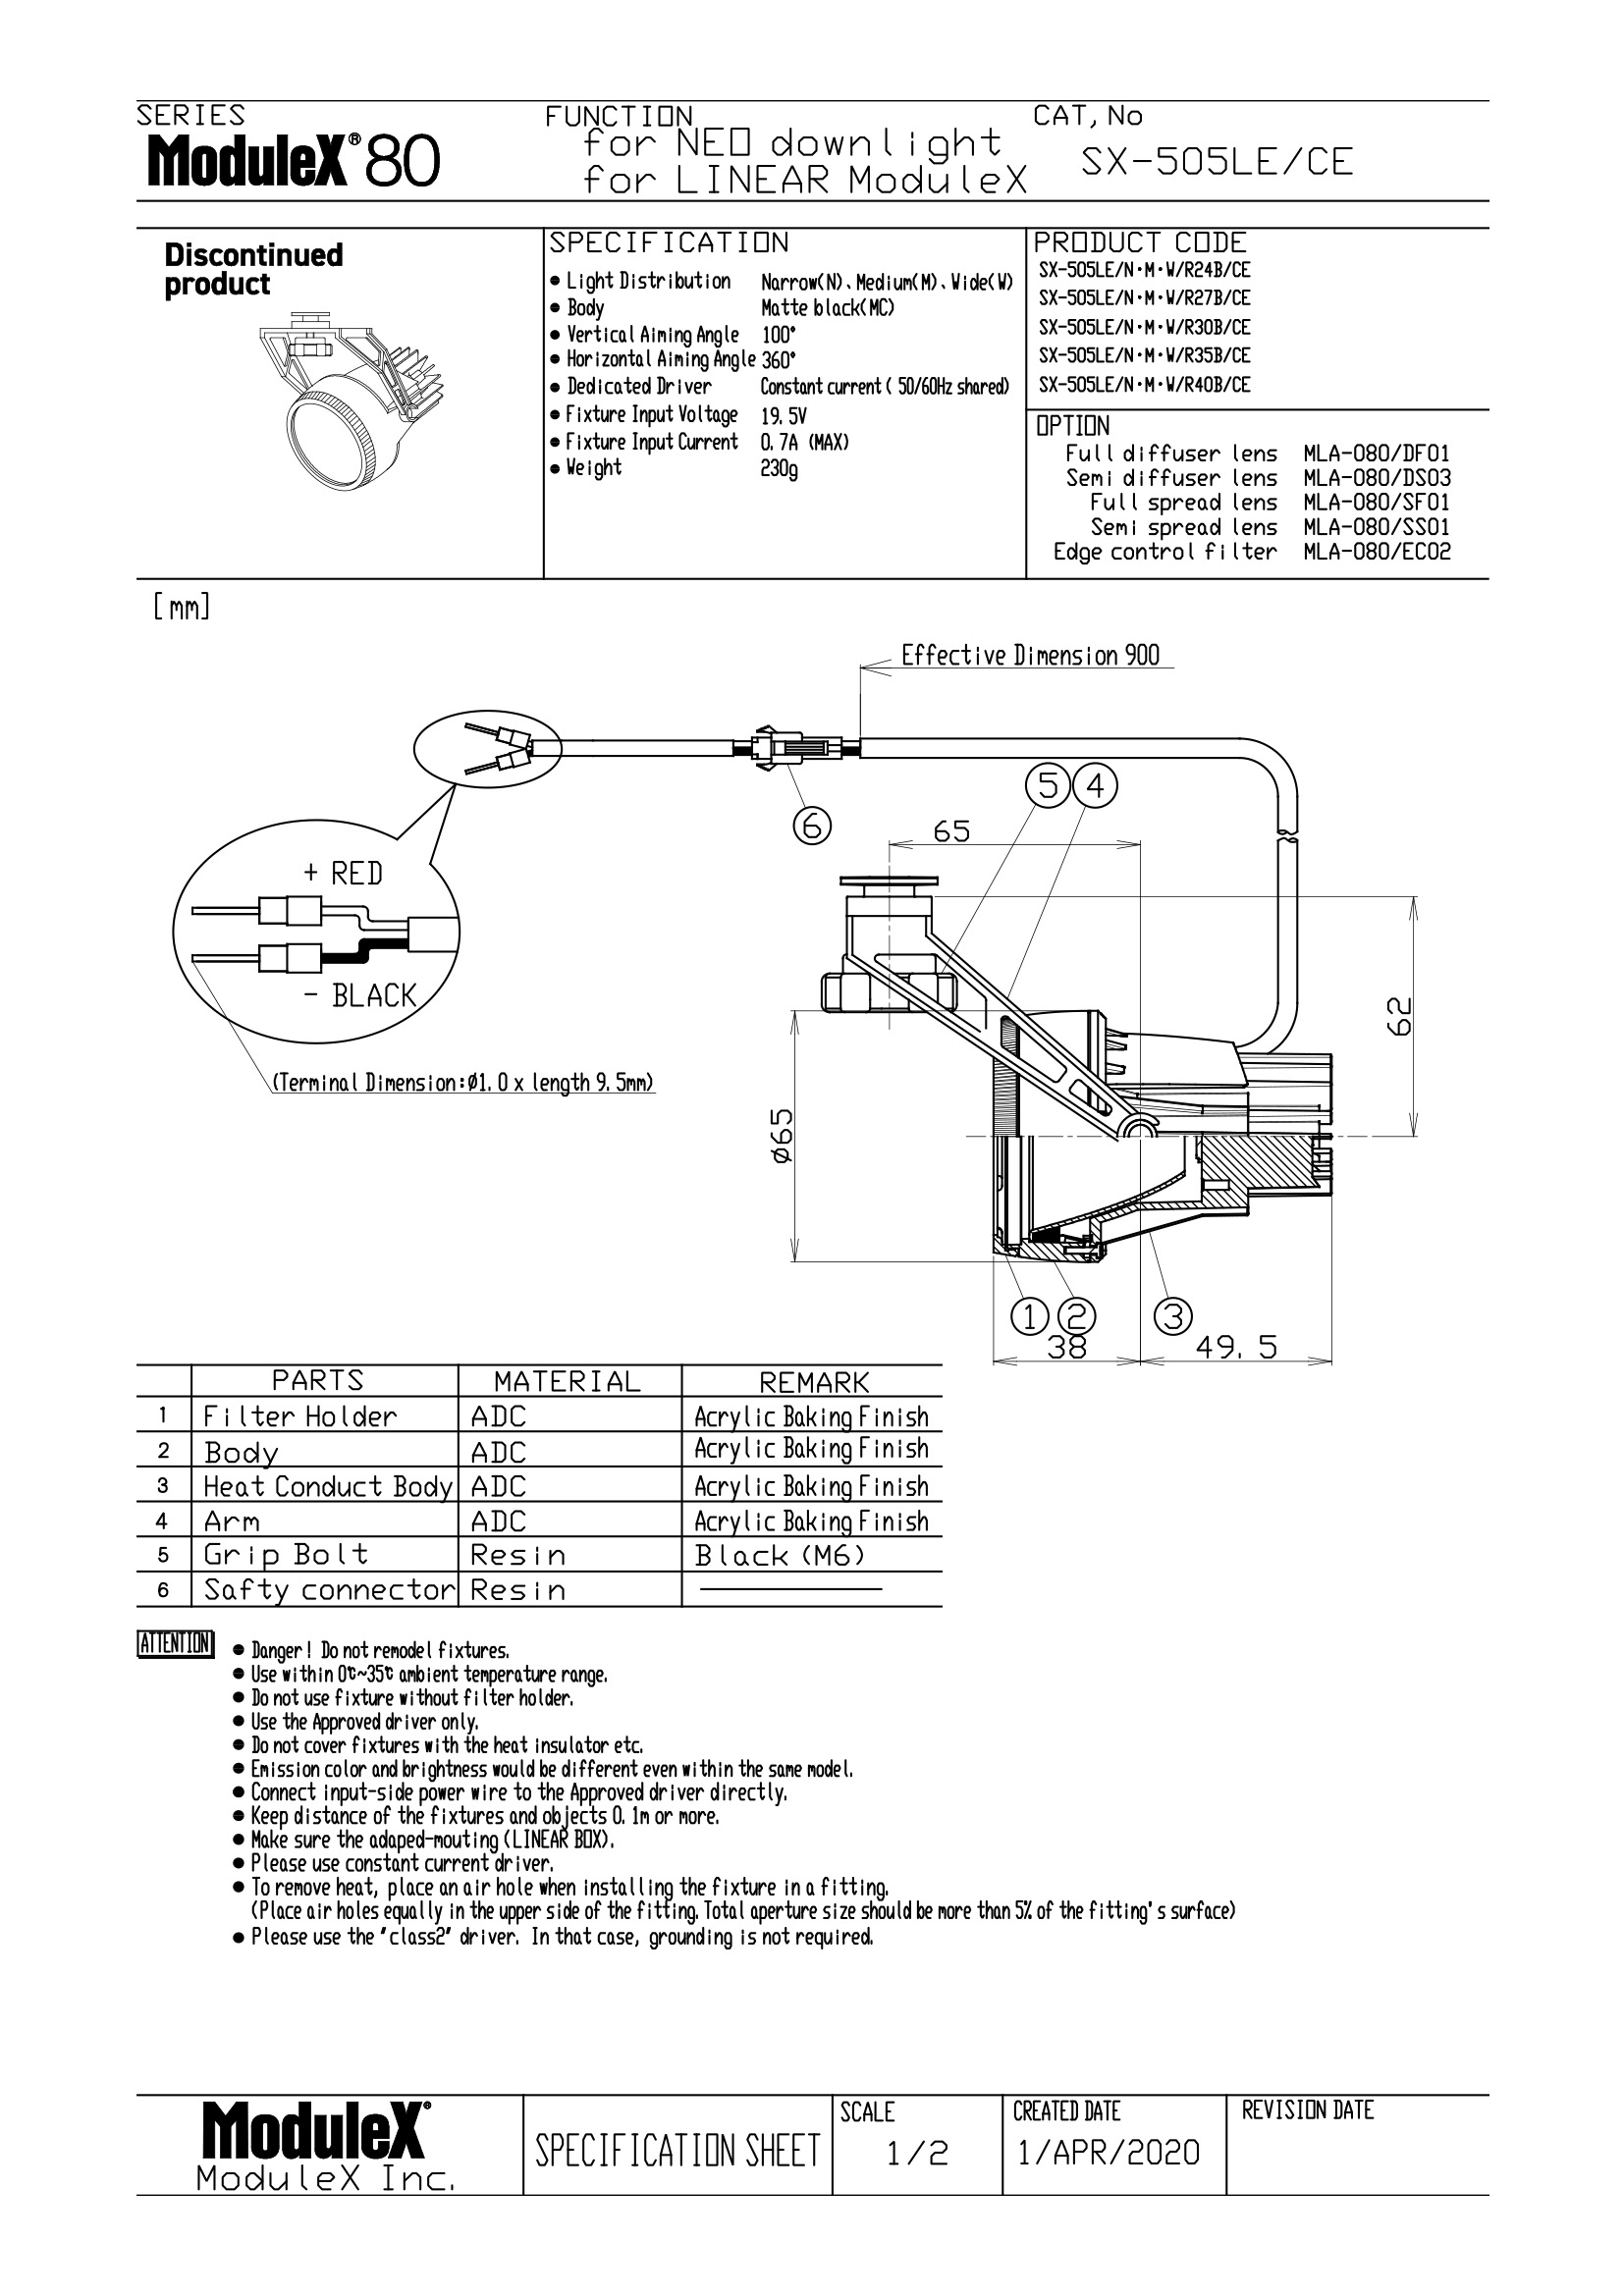 SX-505LE Specification Sheet